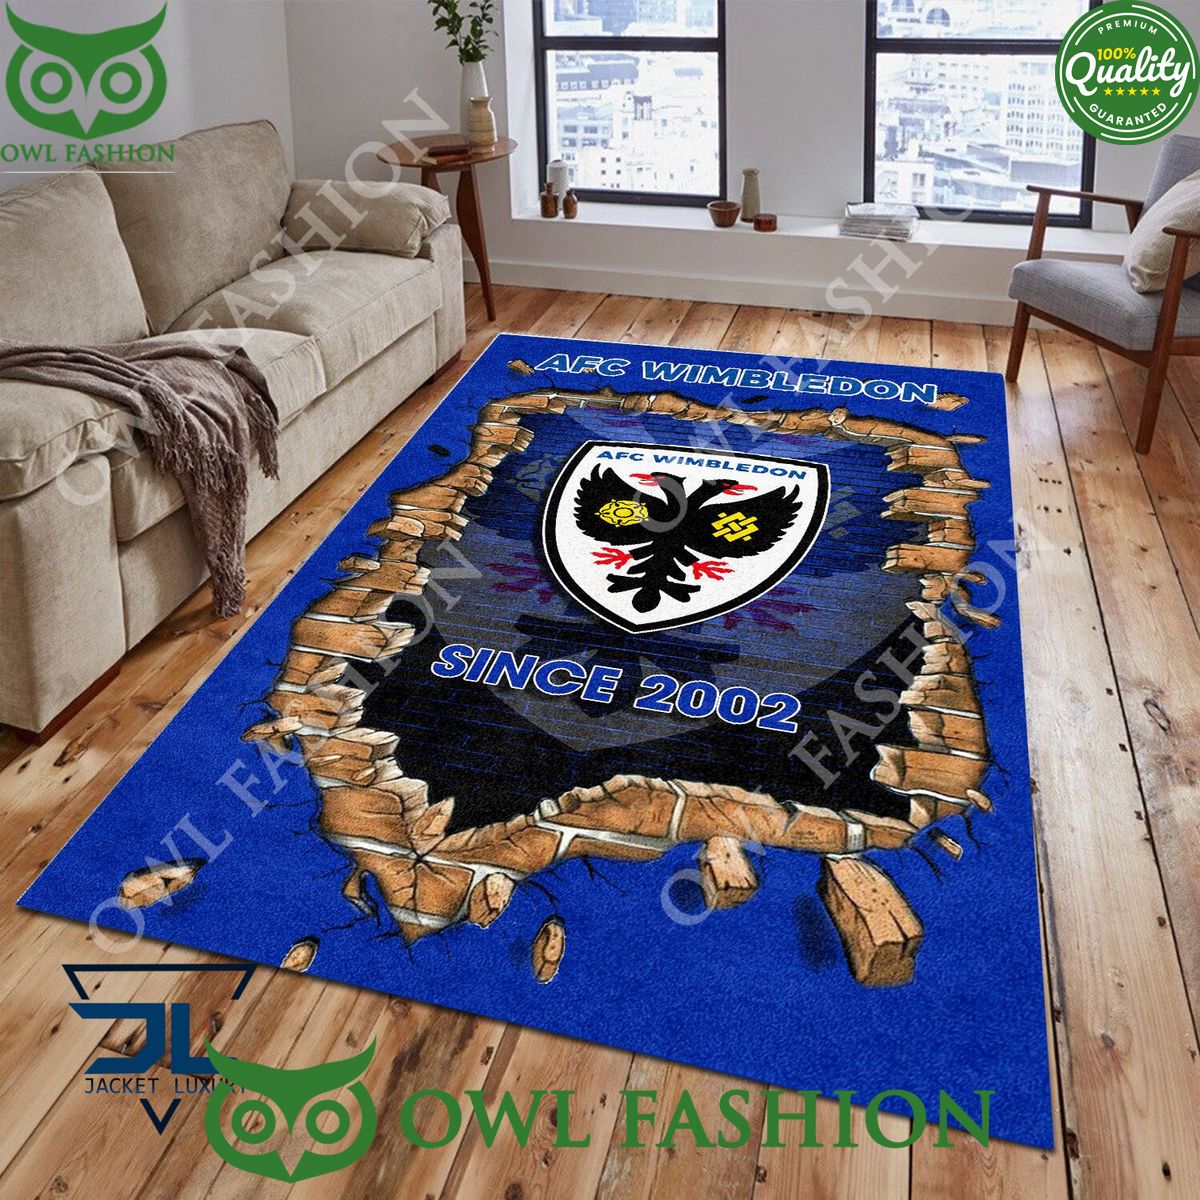 afc wimbledon 1843 league two living room rug carpet 1 byhji.jpg